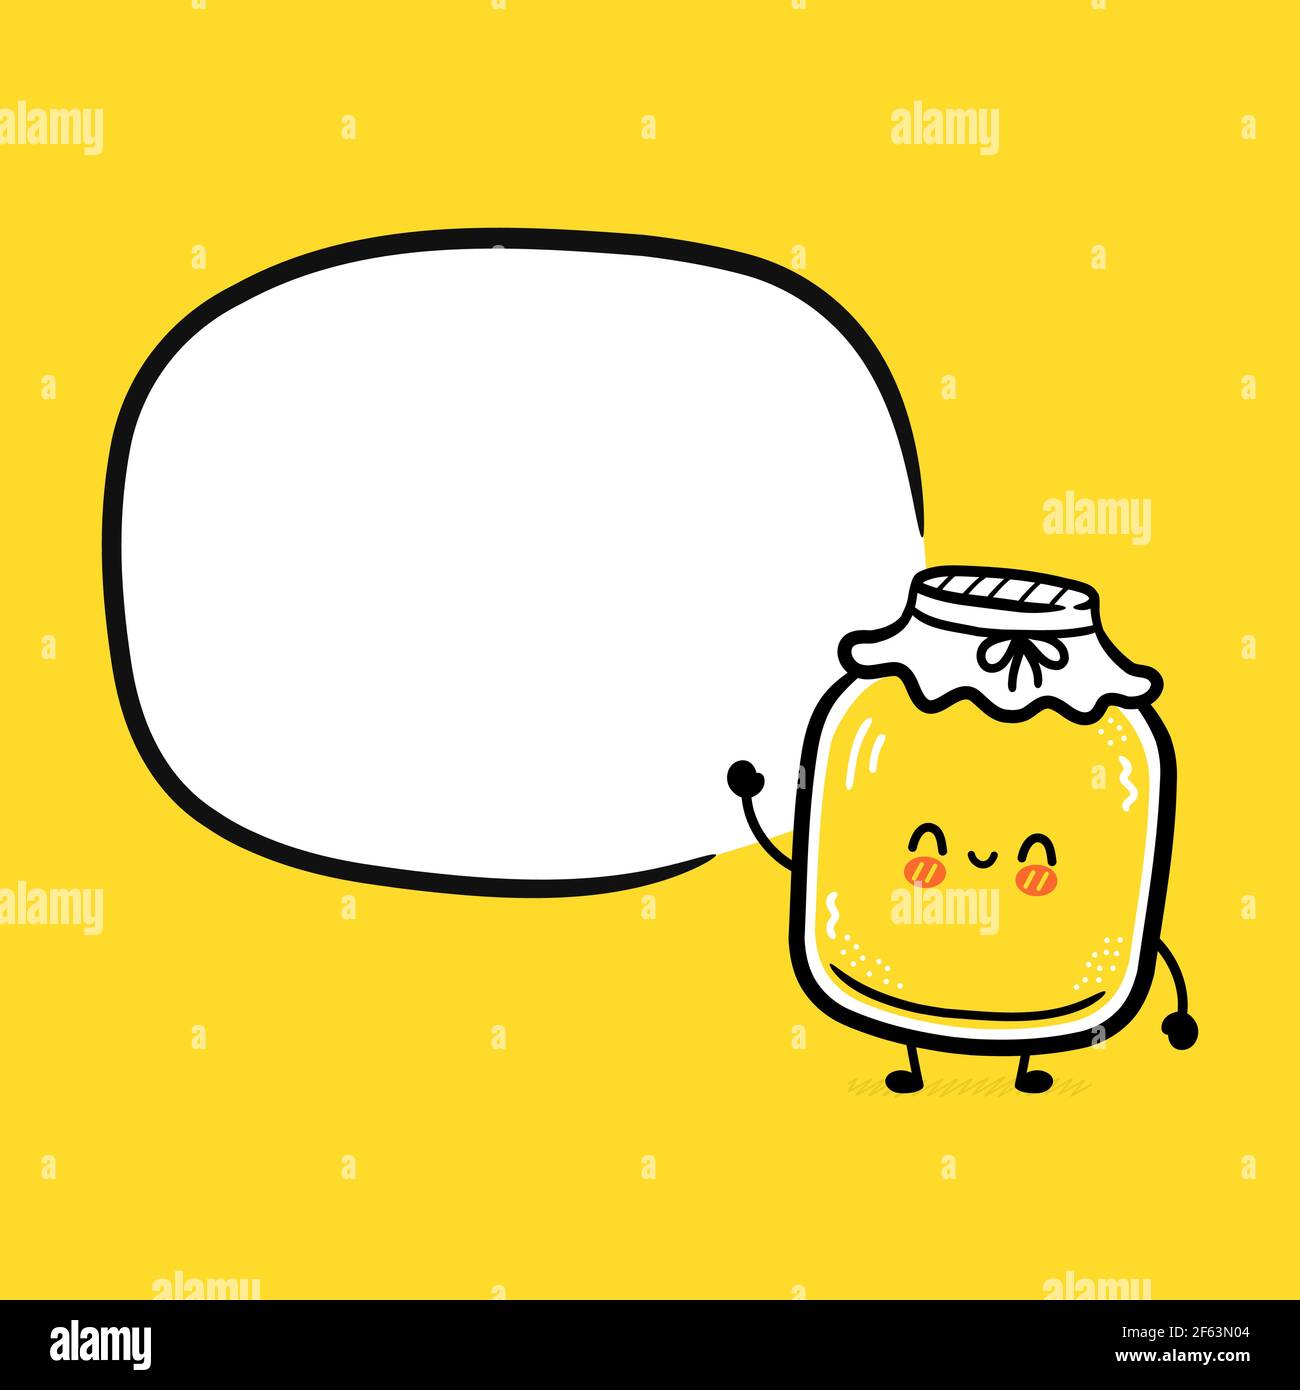 https://c8.alamy.com/comp/2F63N04/cute-funny-kombucha-jar-character-with-speech-bubble-vector-flat-line-cartoon-kawaii-character-illustration-icon-kombucha-jar-character-concept-2F63N04.jpg